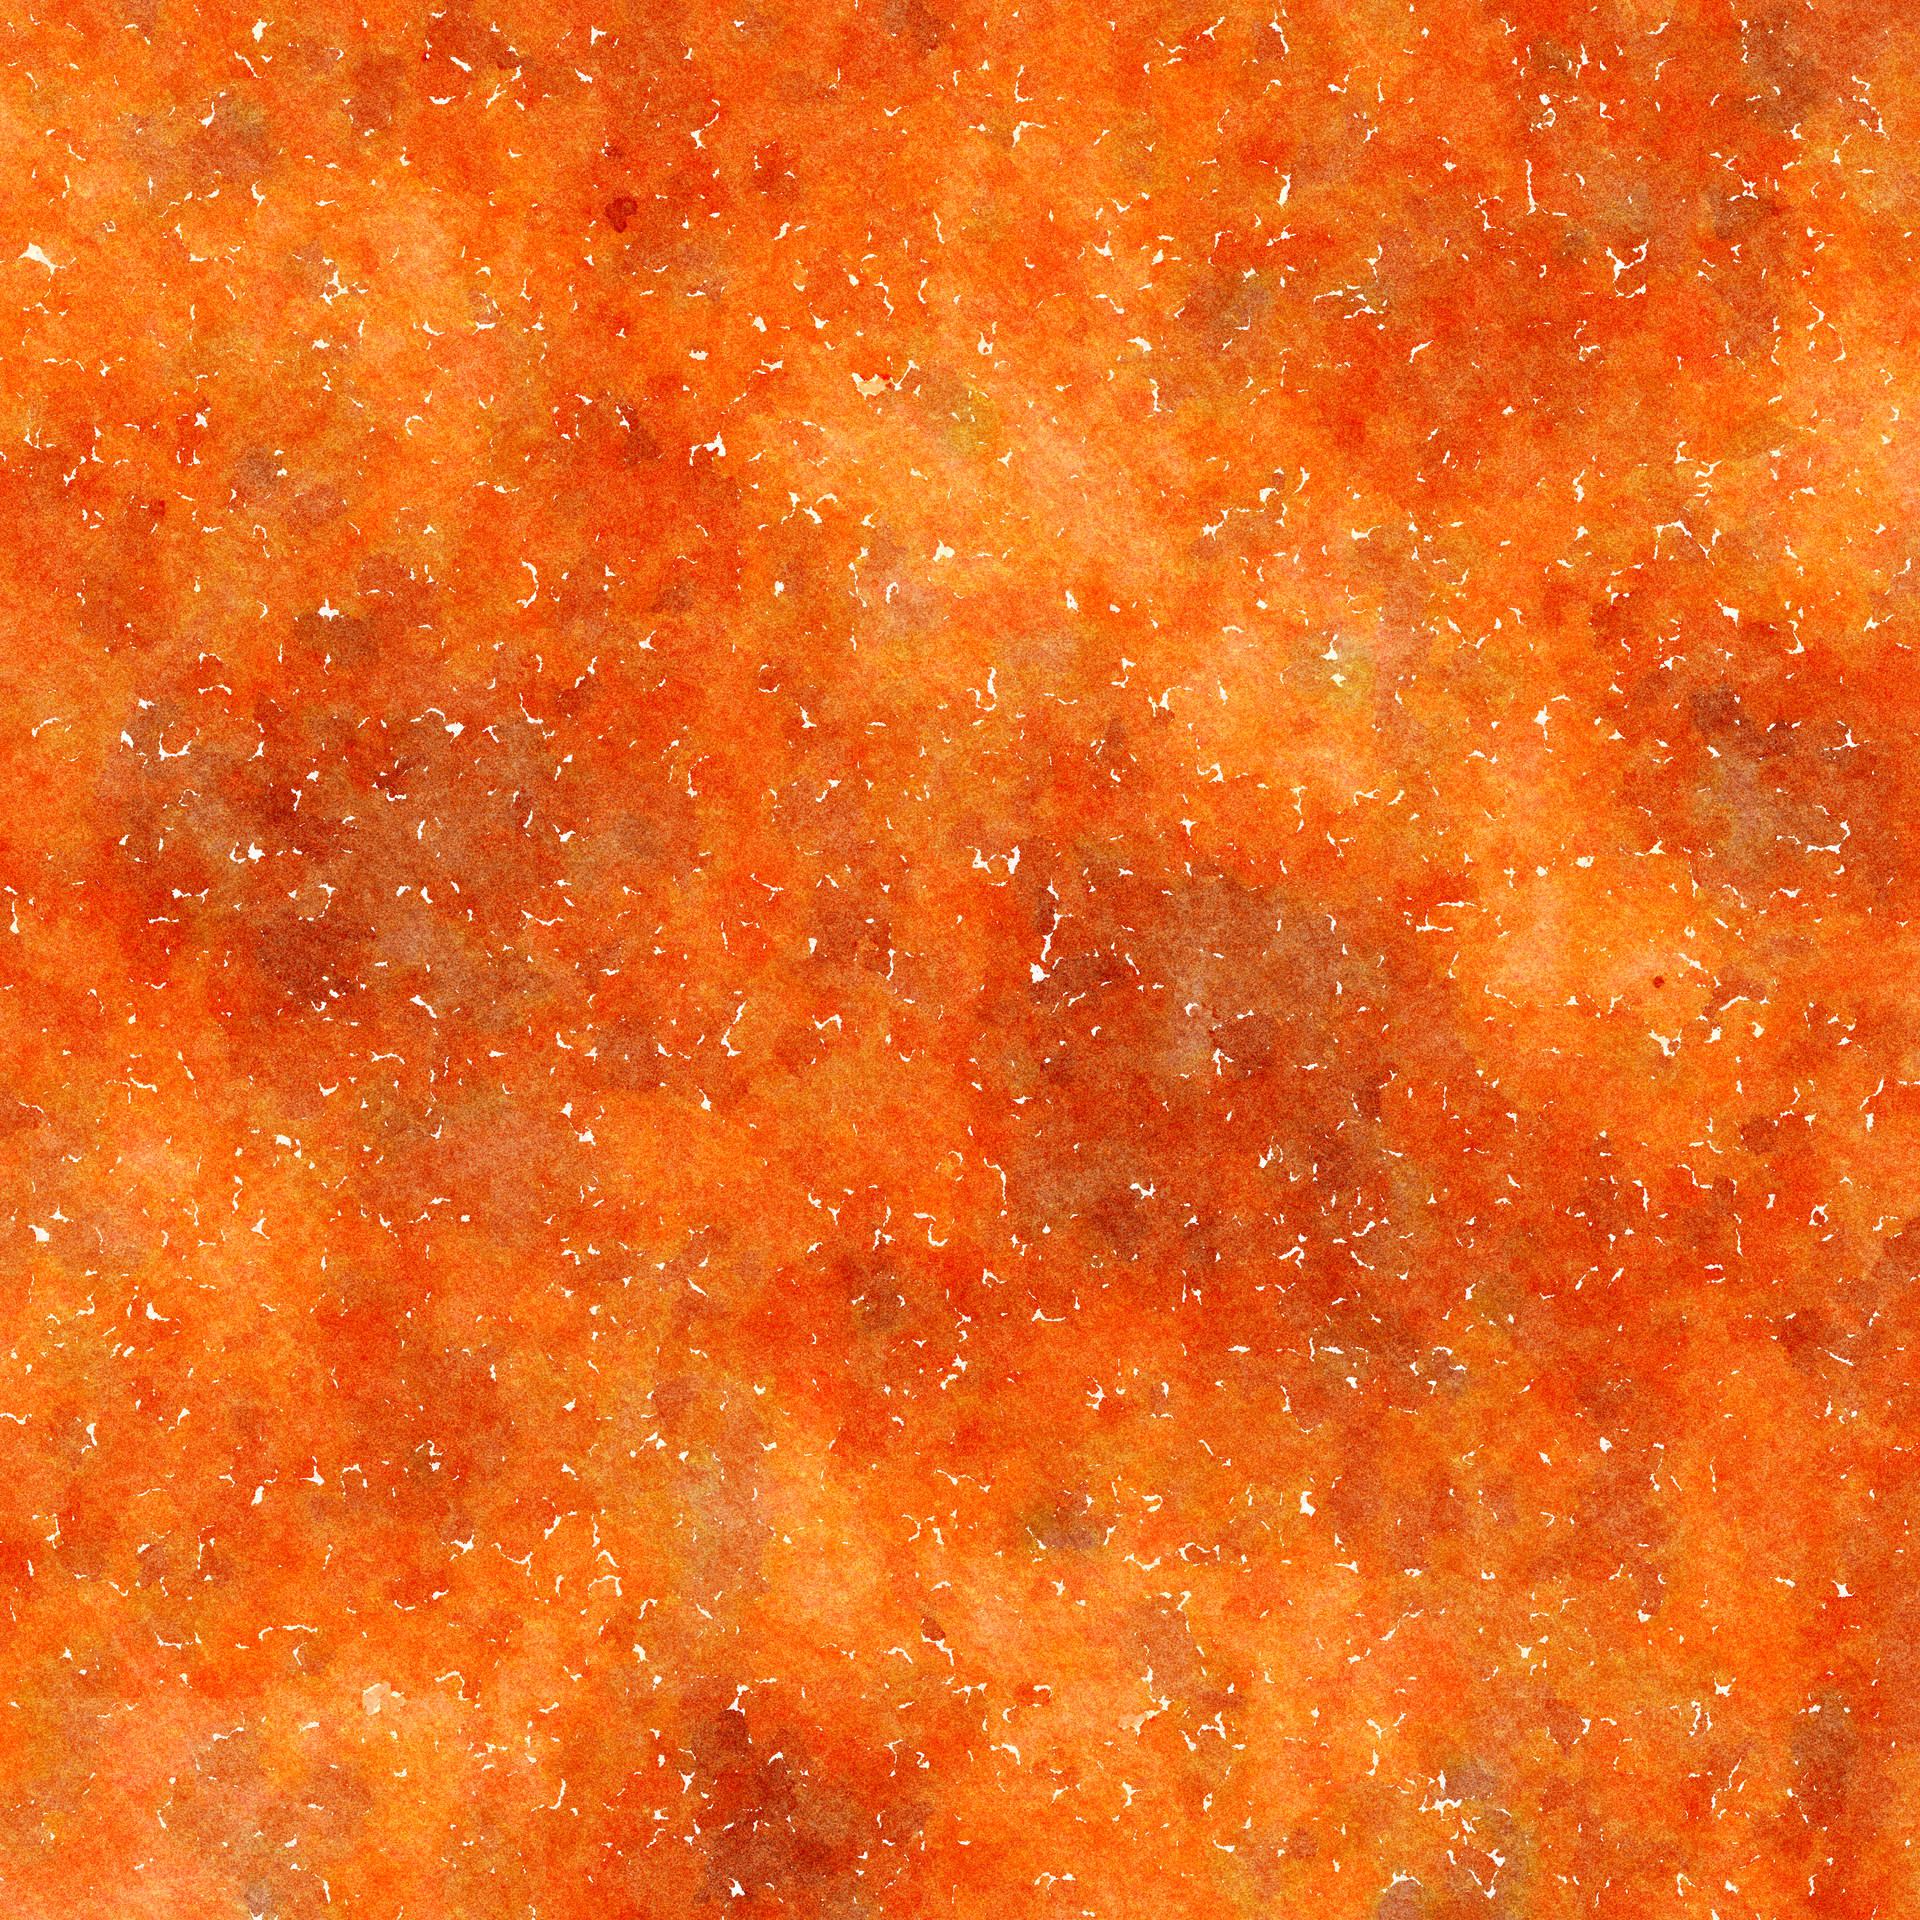 Orange 3600X3600 Wallpaper and Background Image